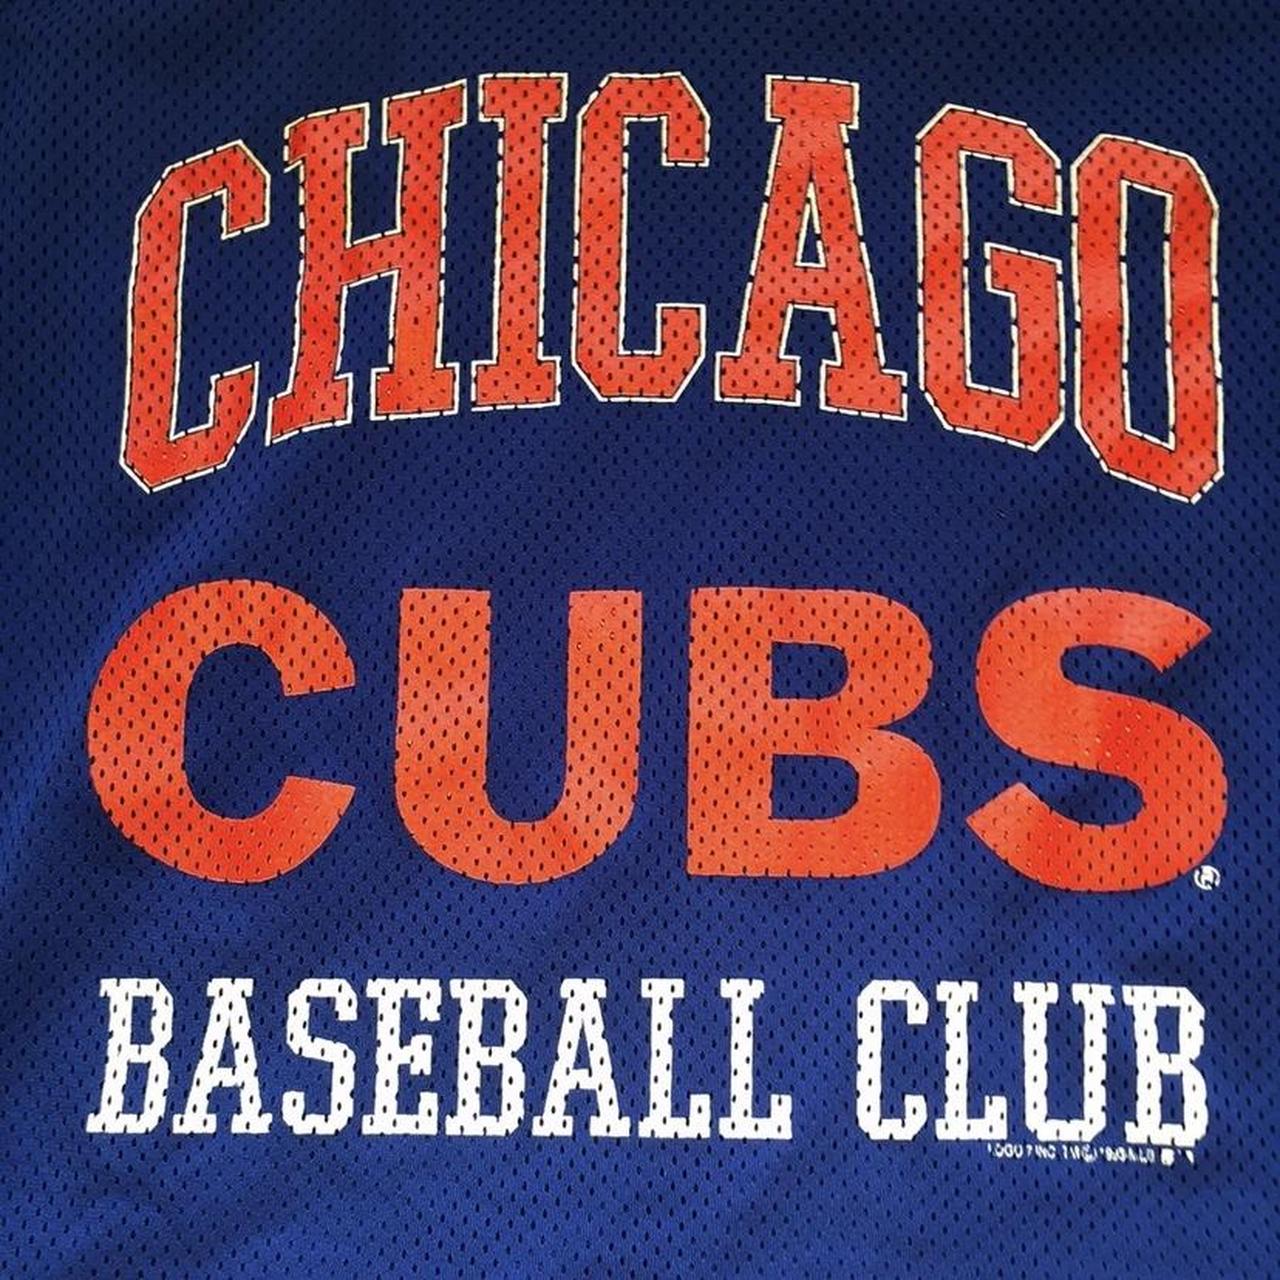 Chicago Cubs Cub circle logo T shirt